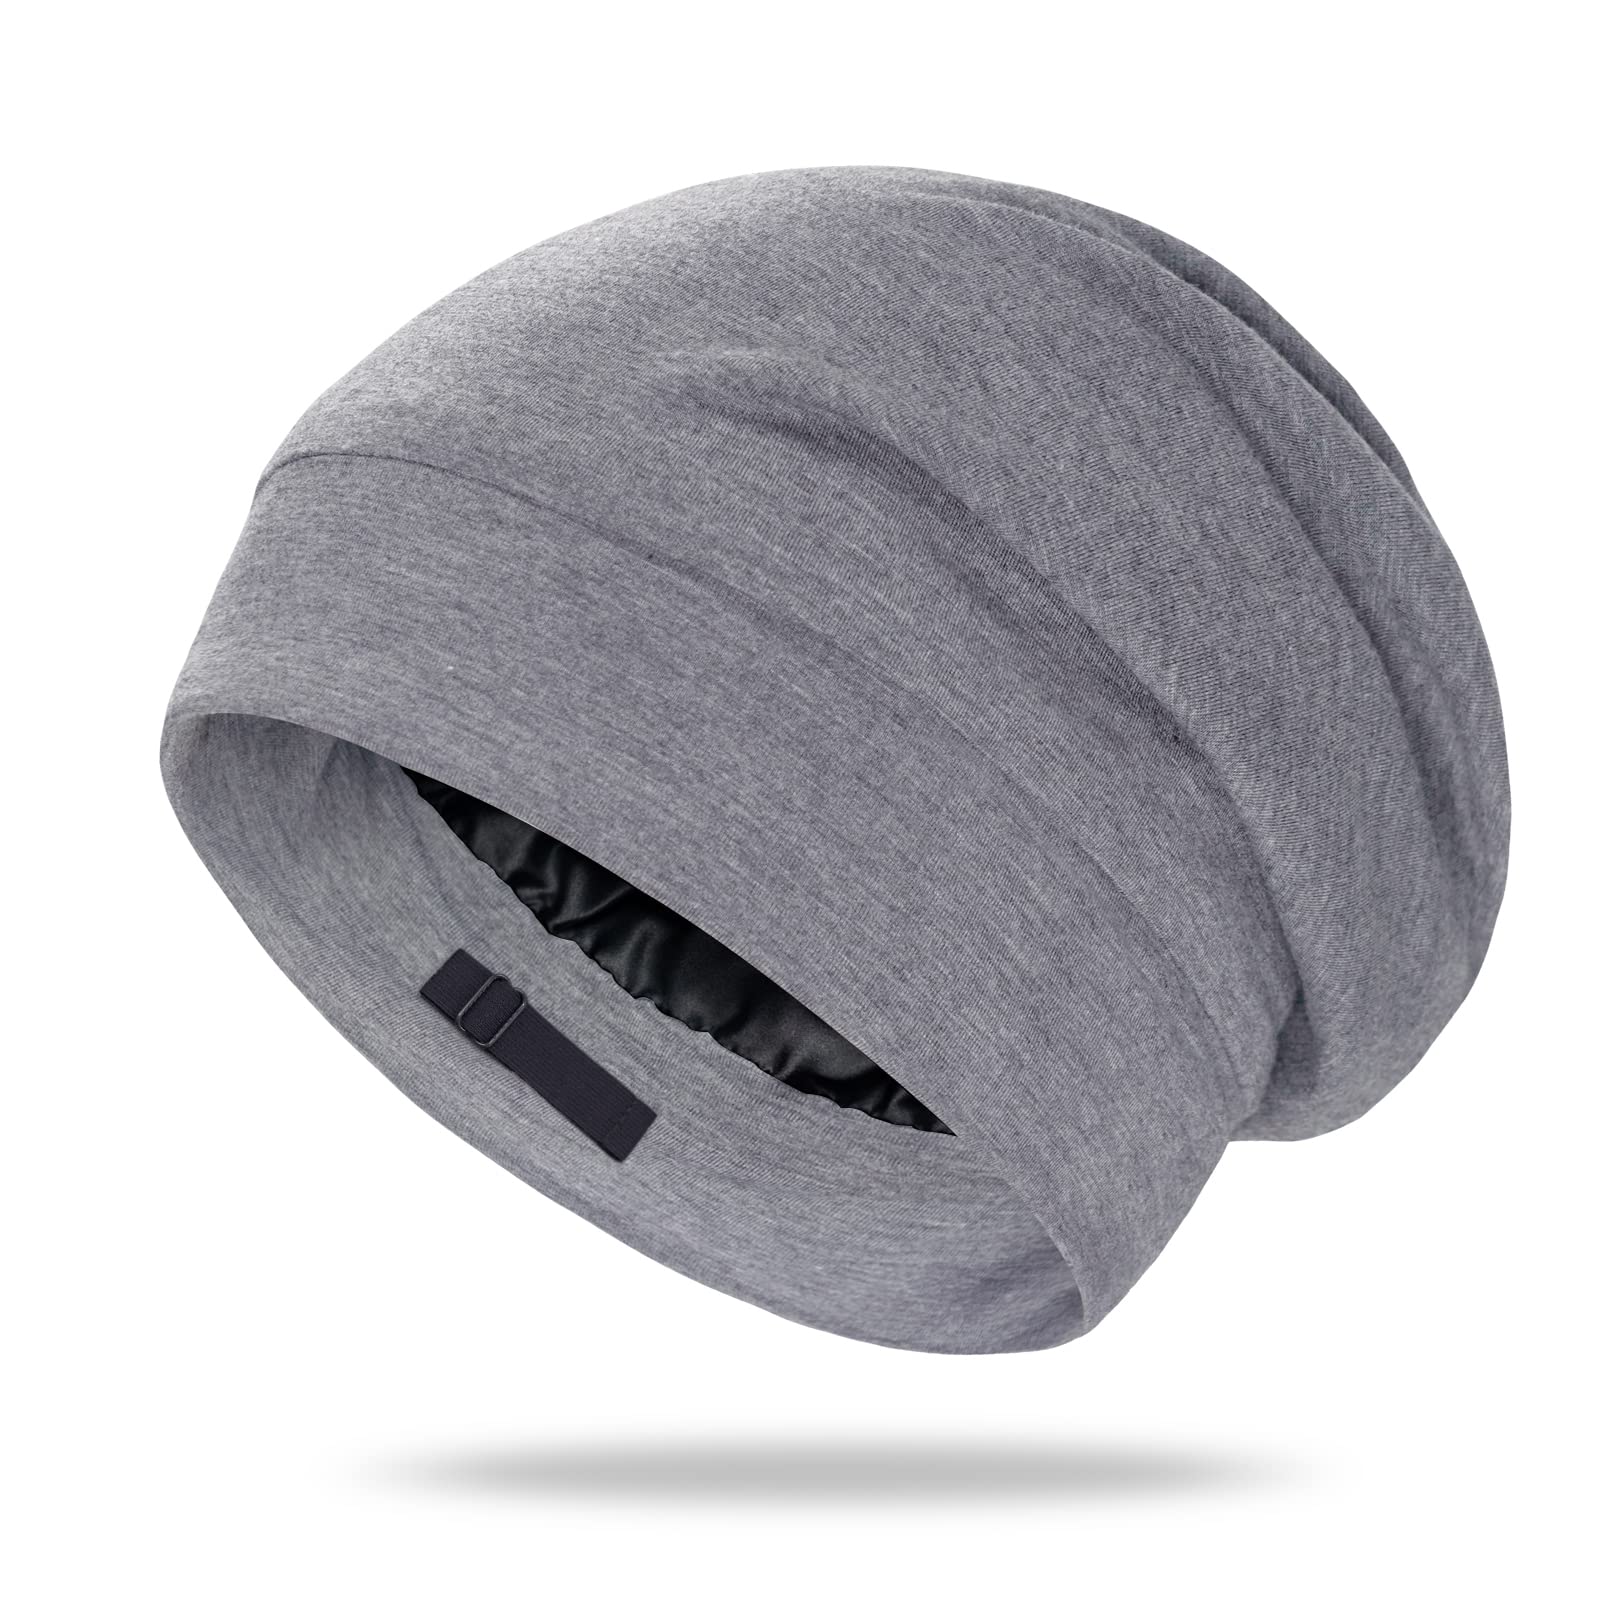 [LULUSILK] ナイトキャップ シルクナイトキャップ 帽子 メンズ レディース 19匁6Aシルク ロングヘア用 ヘアキャップ モダール 美髪